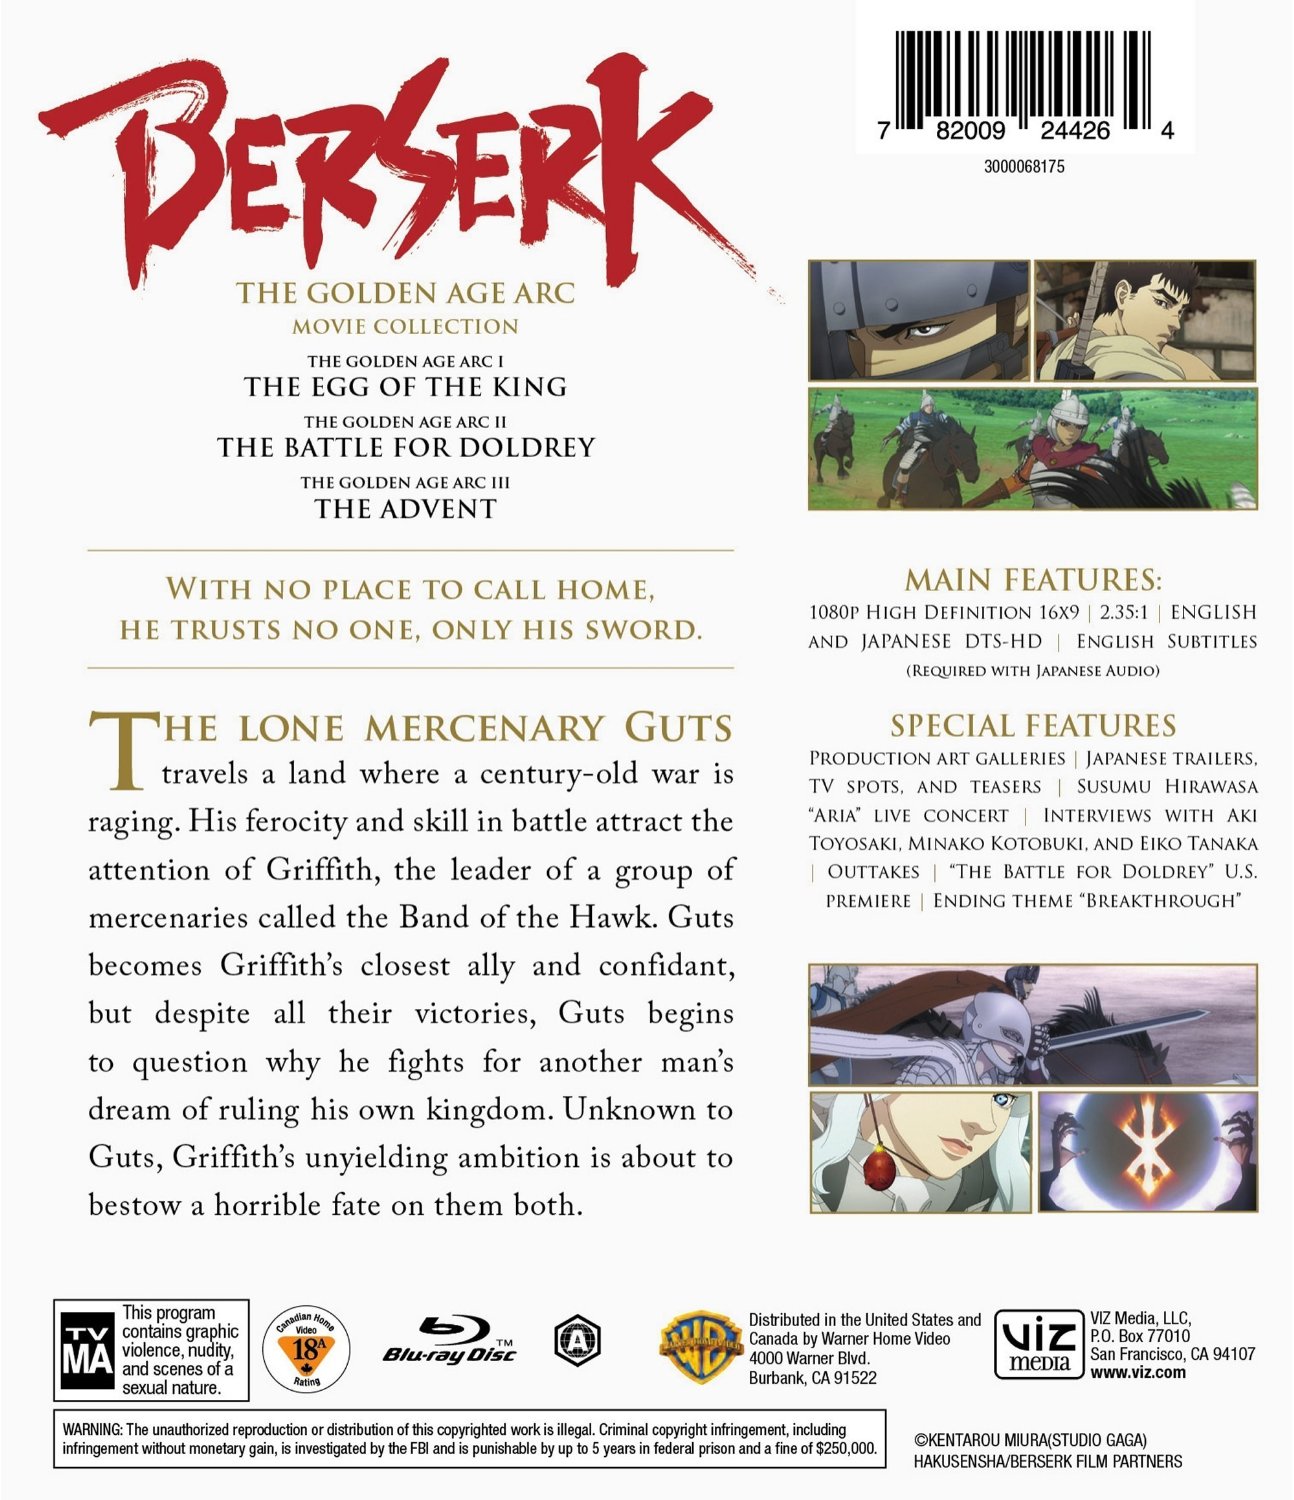 berserk golden age arc 3 full movie english sub download